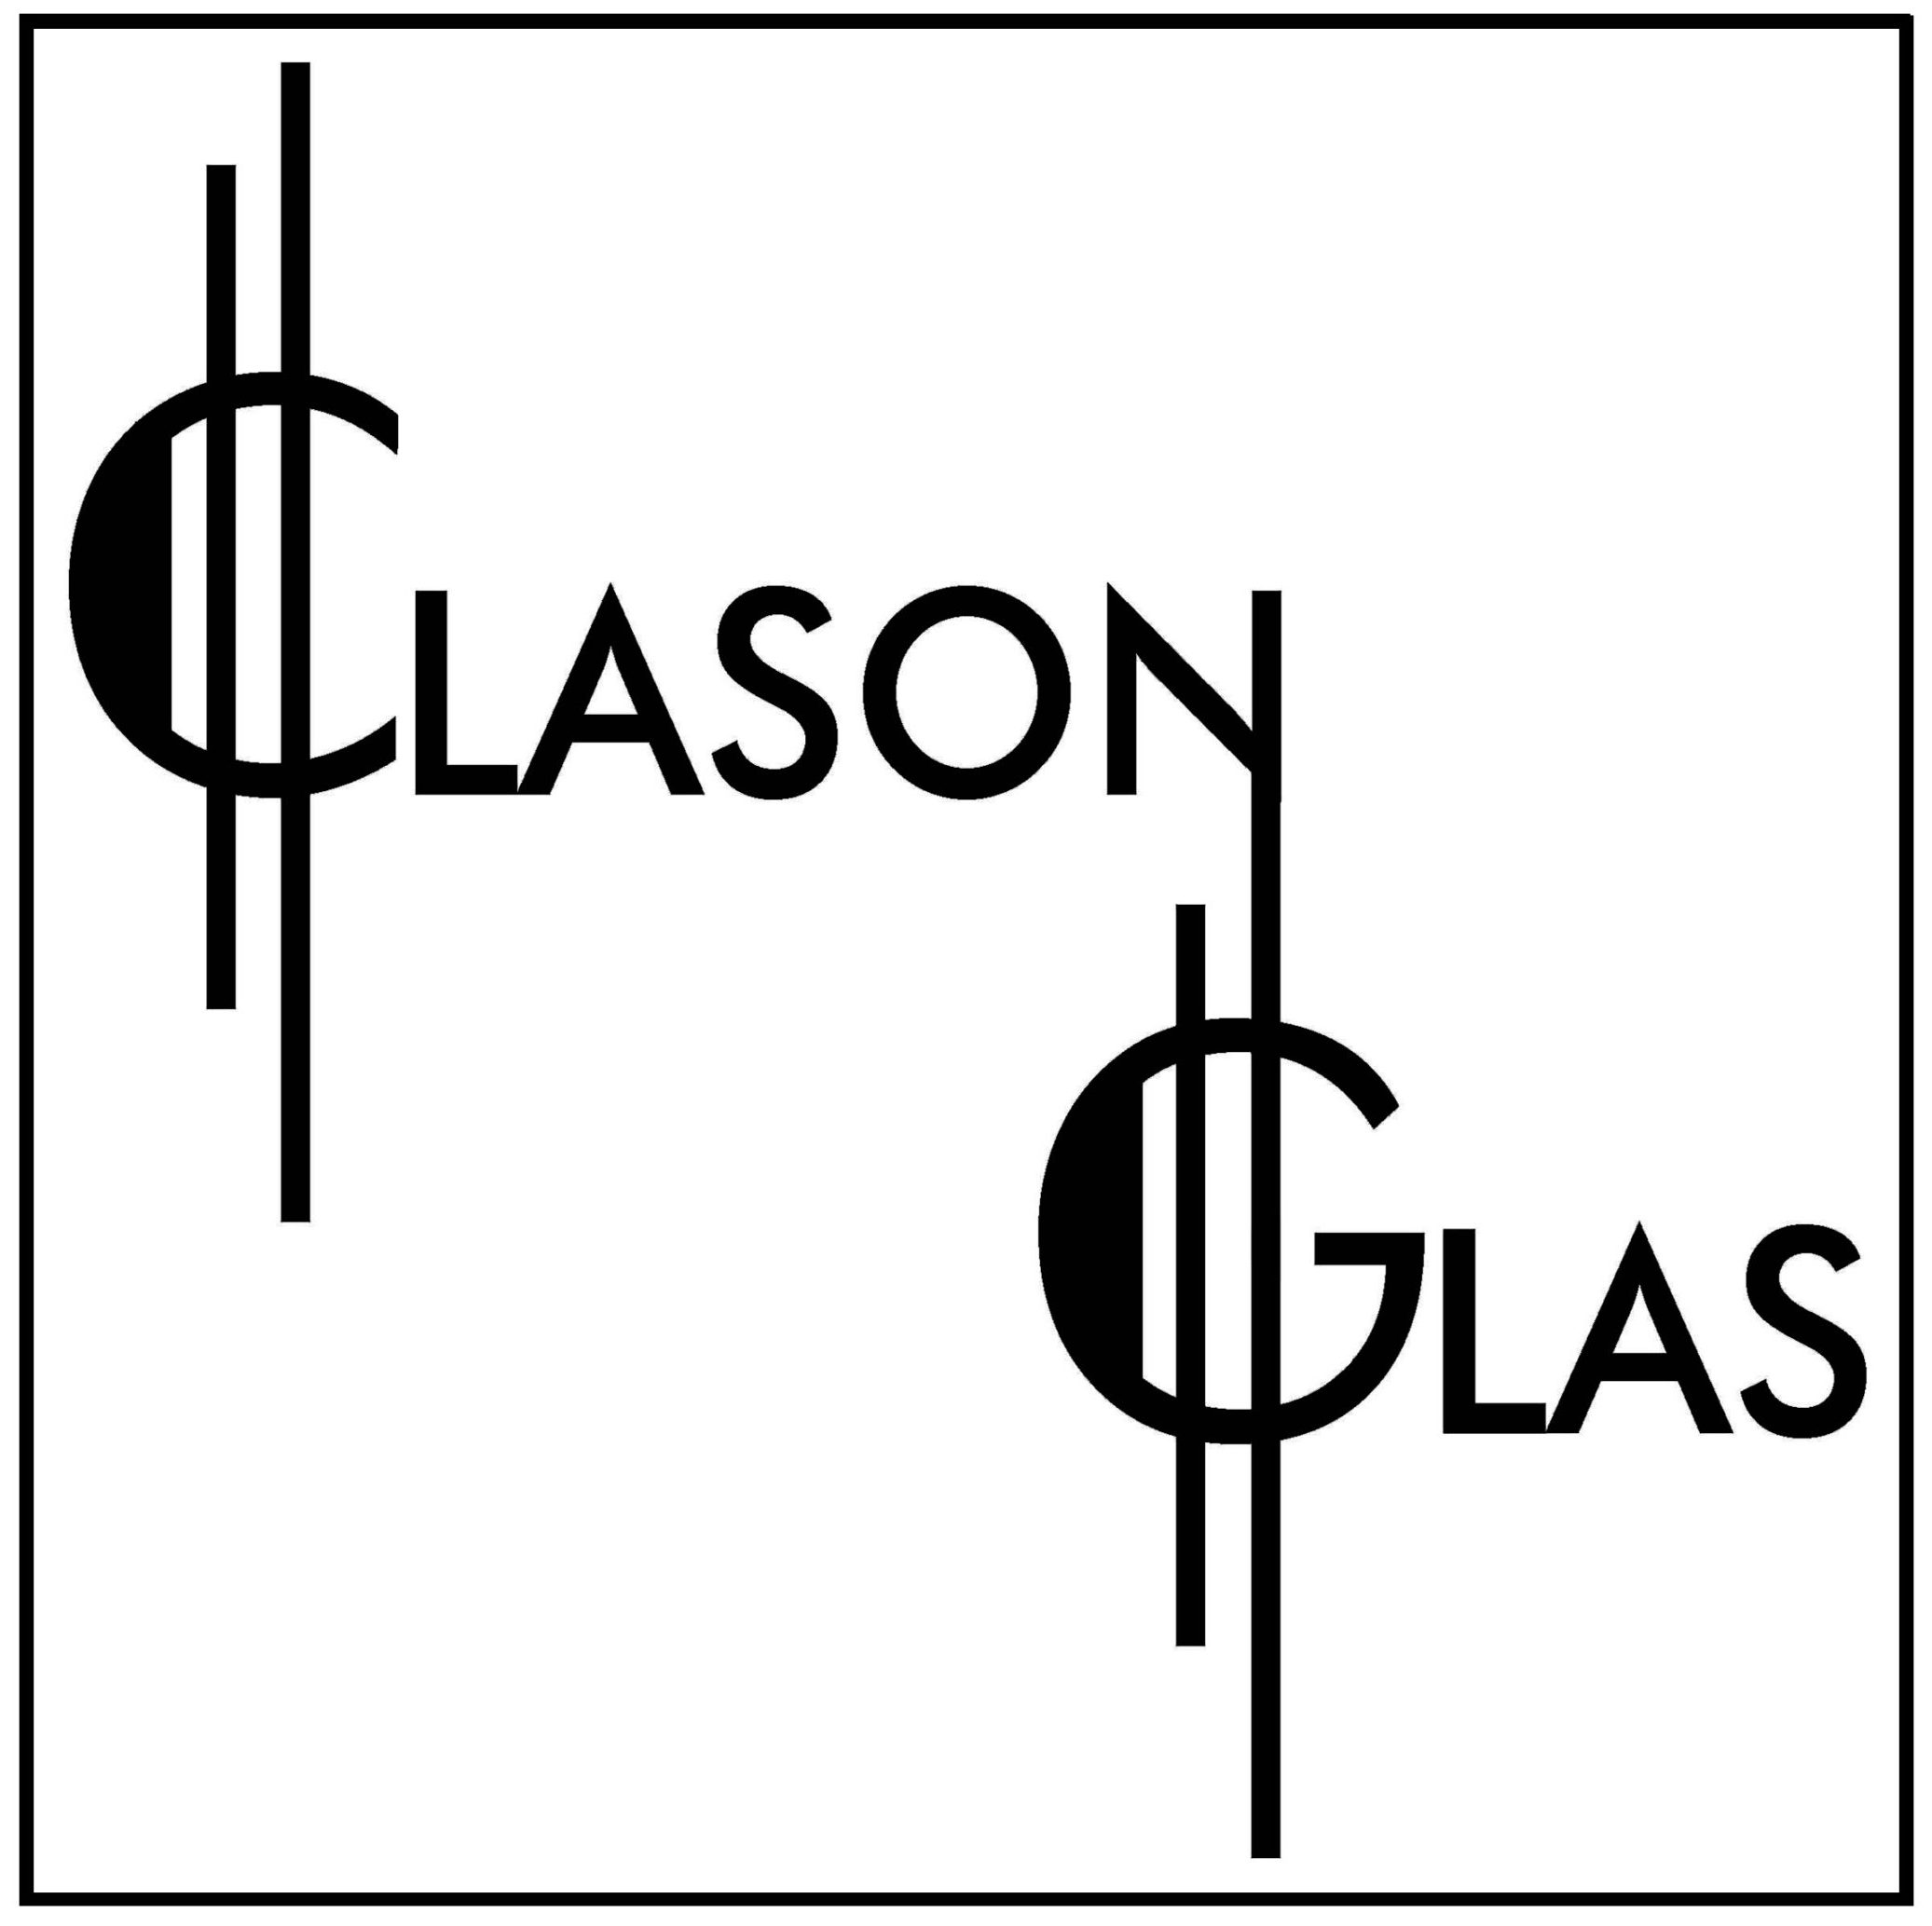 Clason Glas